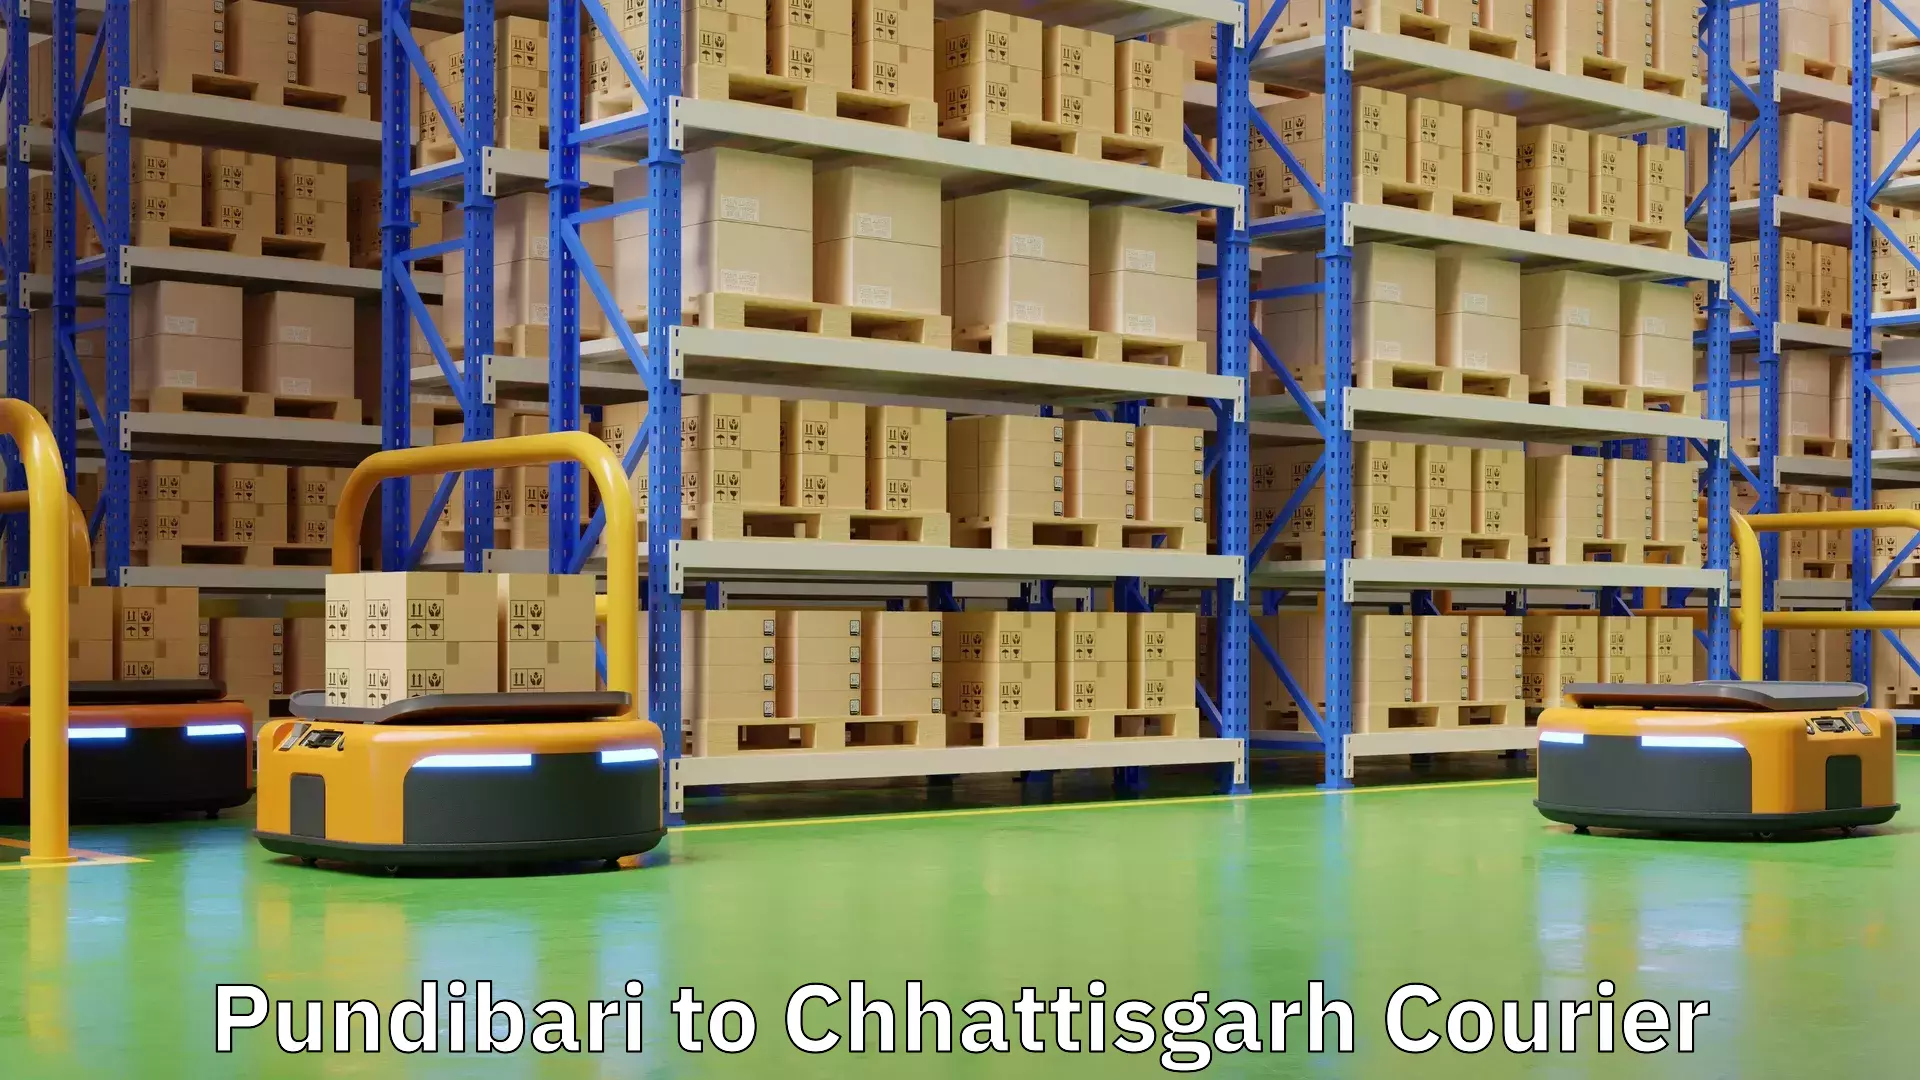 Digital courier platforms Pundibari to Chhattisgarh